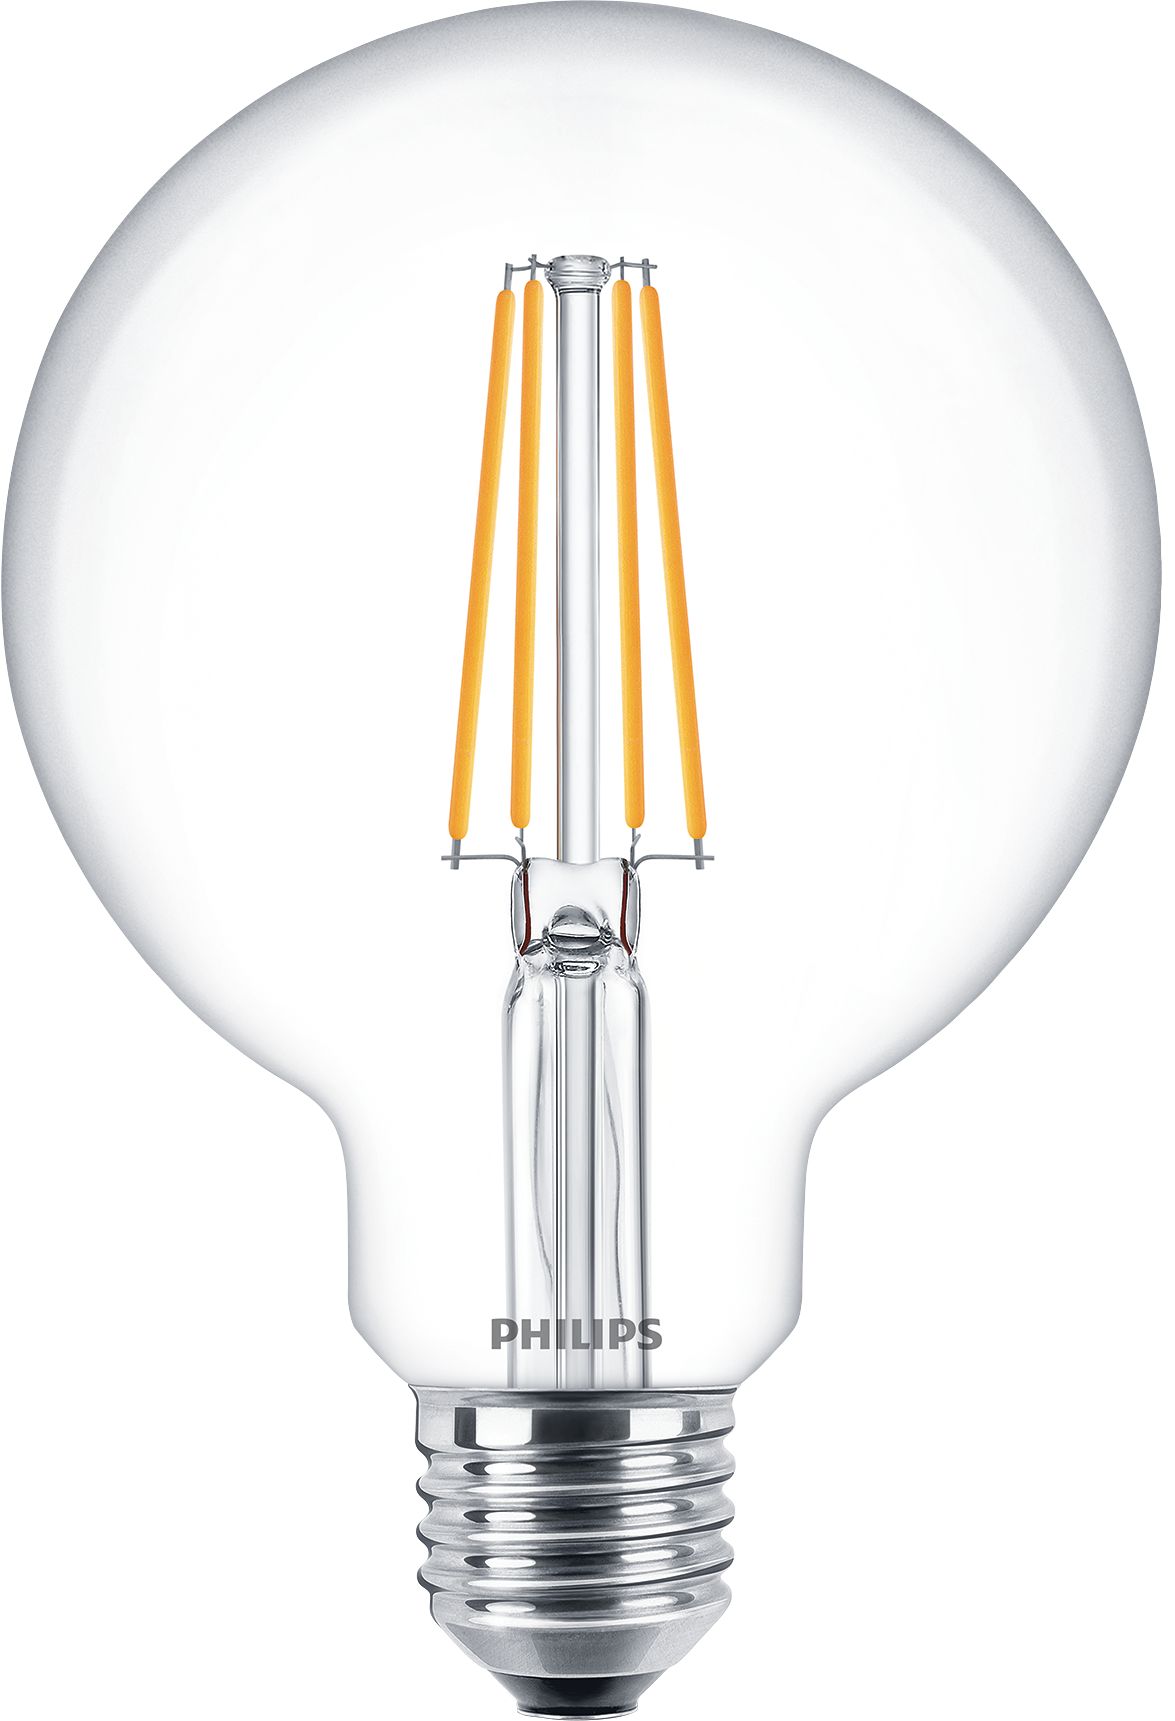 motion shear Pef Classic filament LEDbulbs | LEDFILAM | Philips lighting